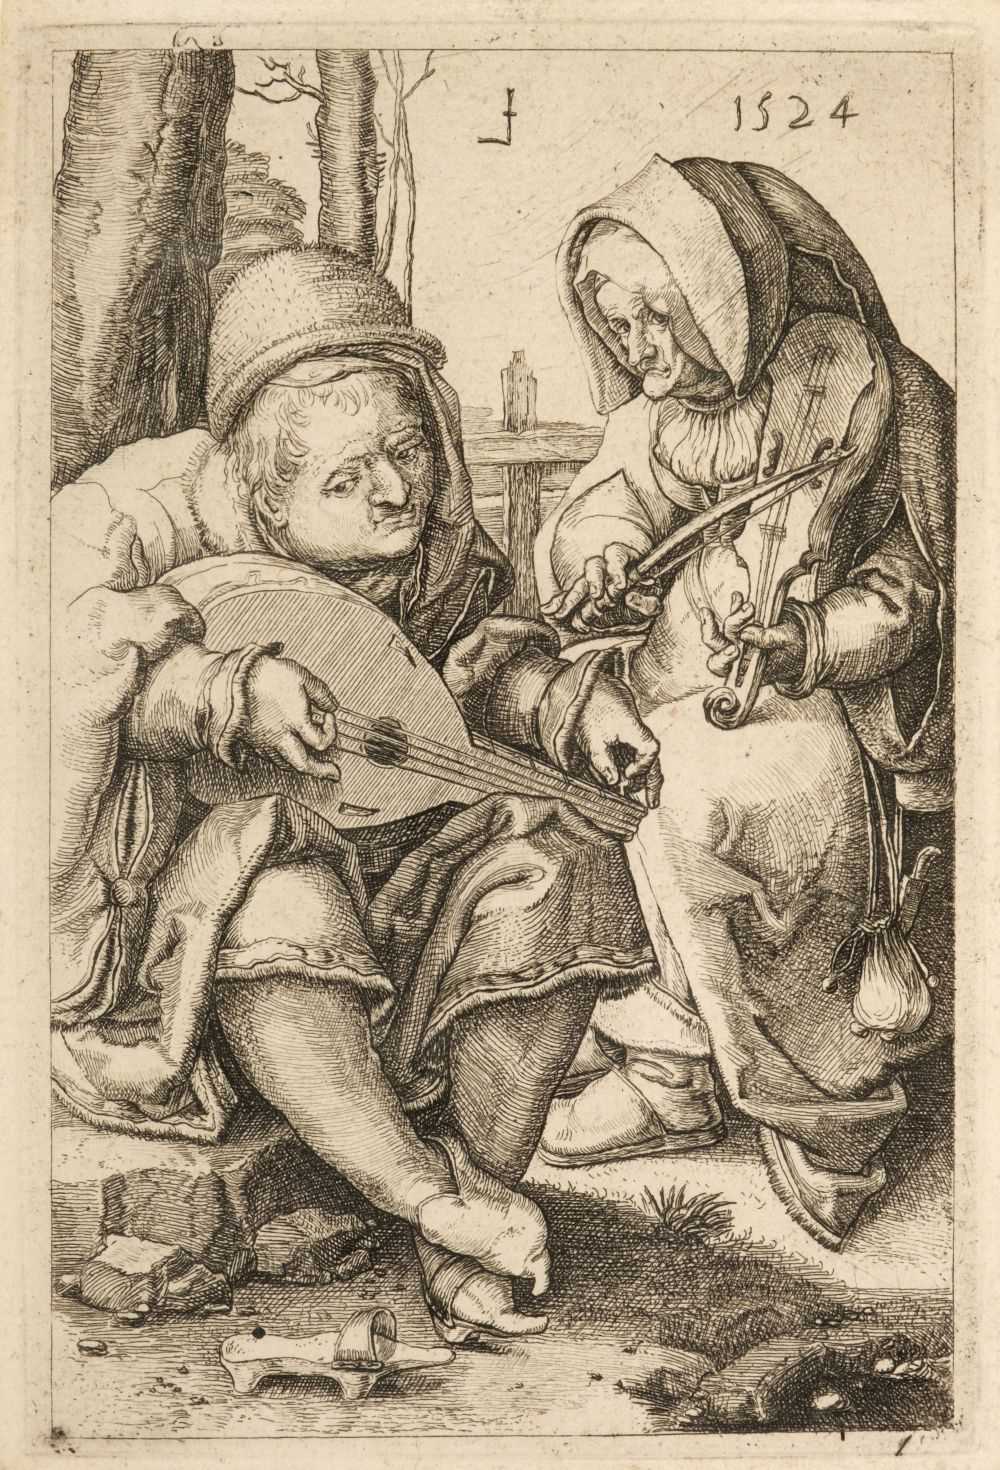 Lot 345 - Leyden (Lucas van, 1494-1533). The Musicians, 1524